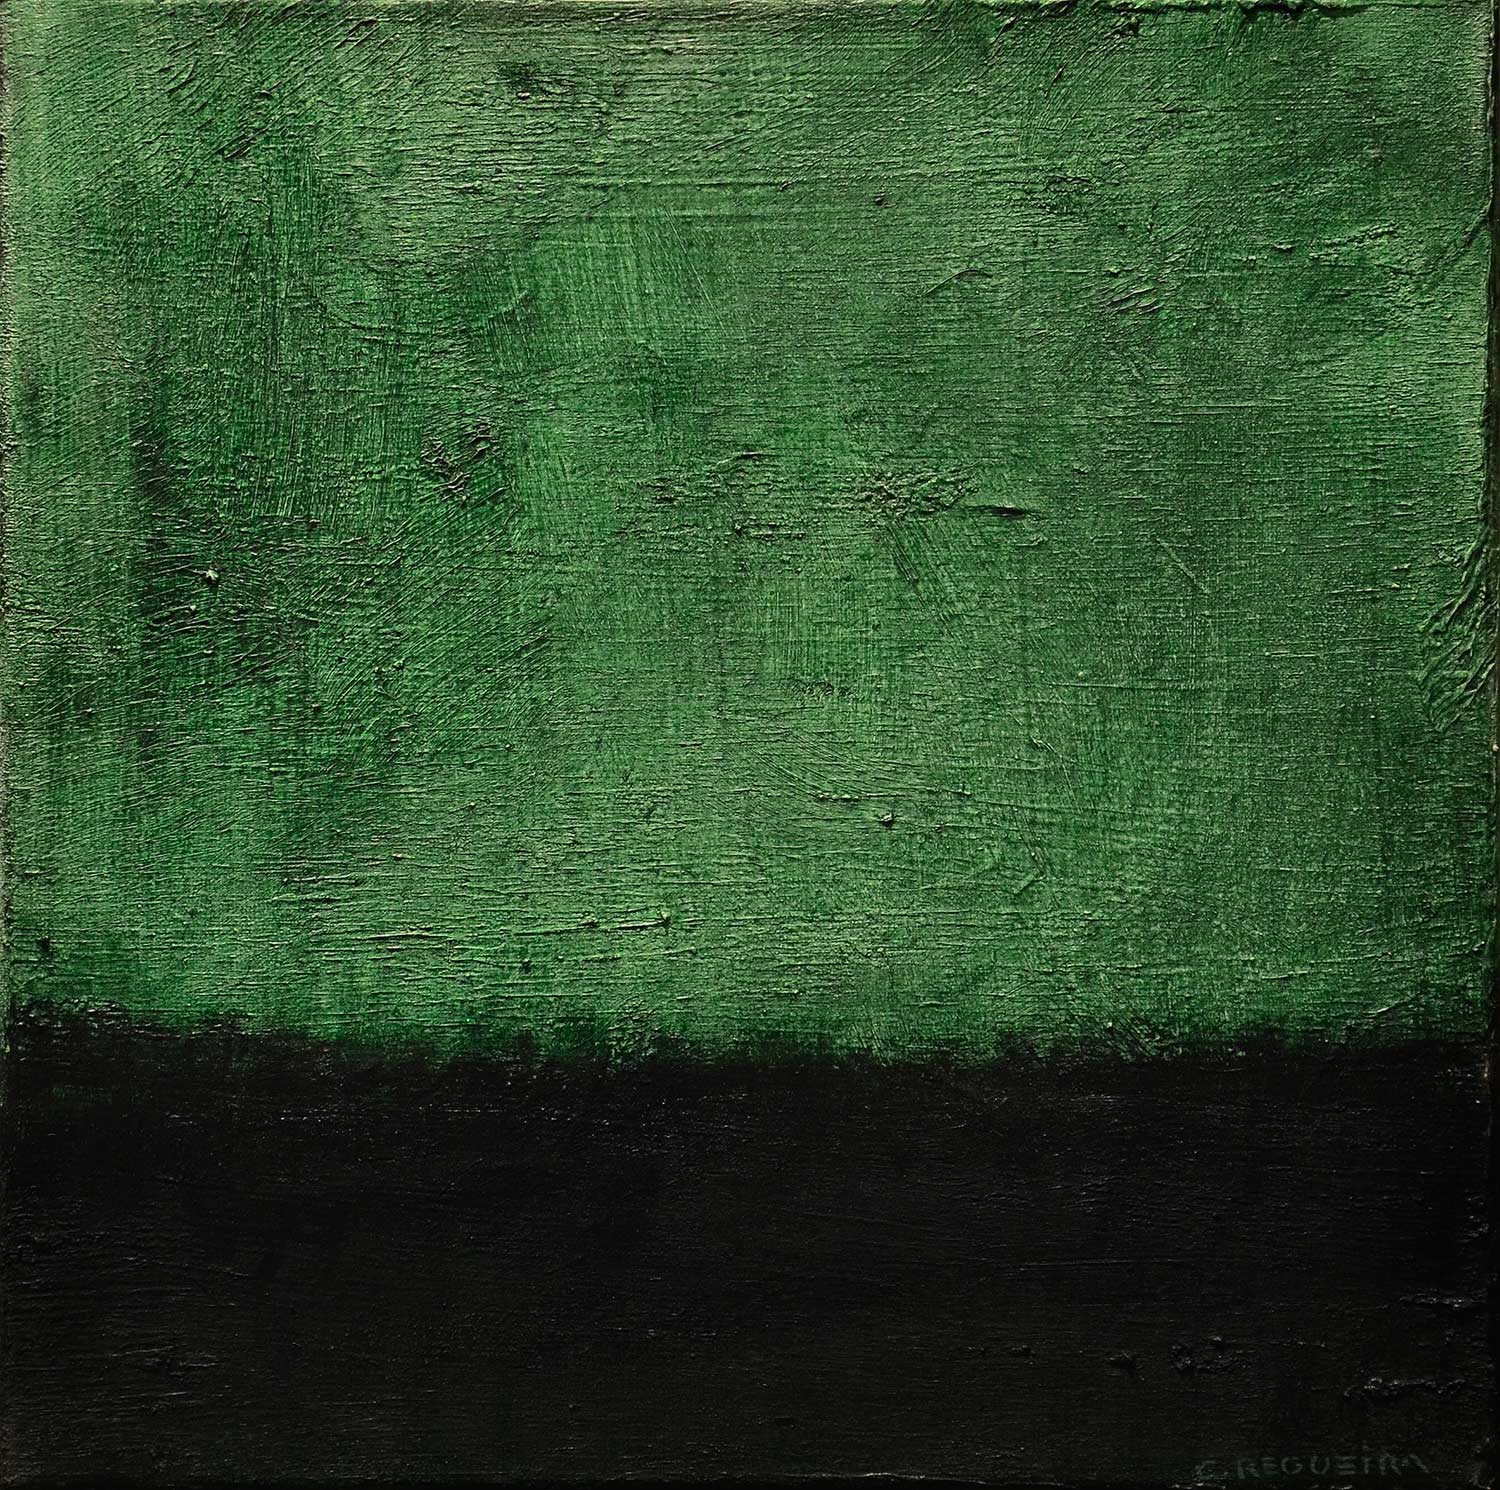 "Paisaje verde y negro / Green and black landscape"